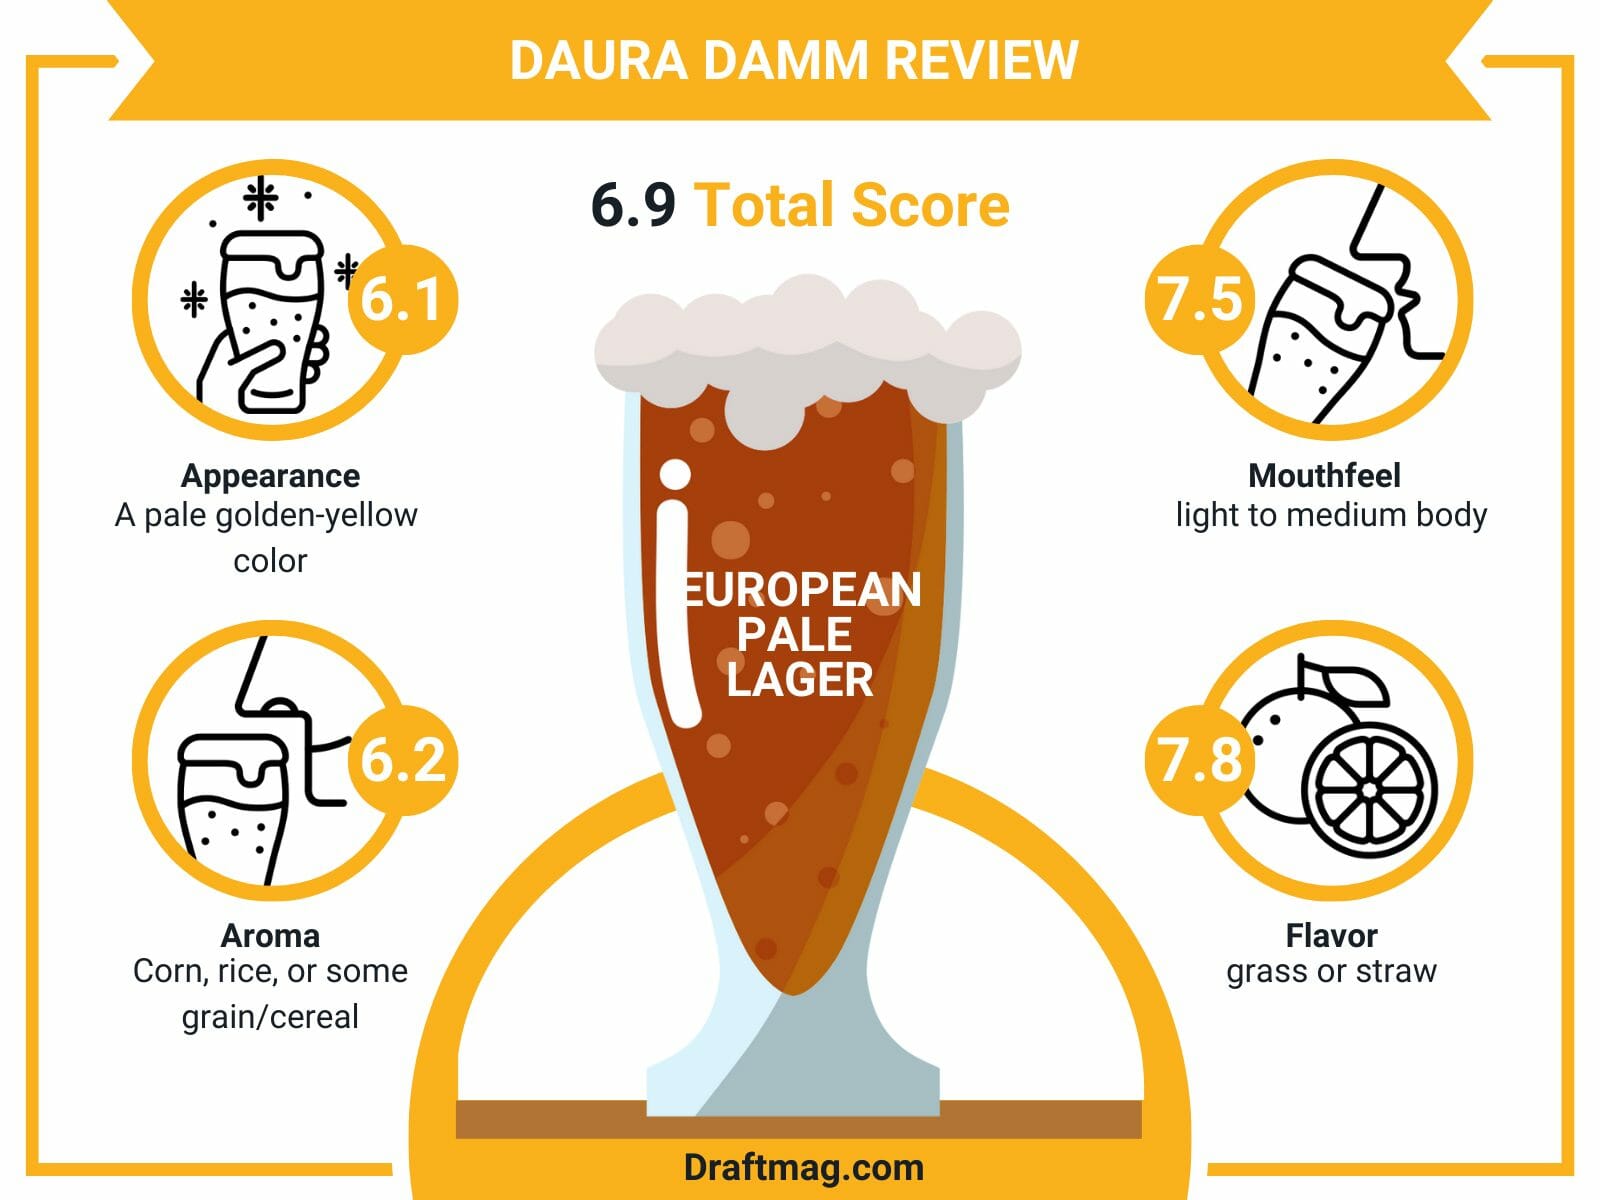 Daura damm review infographic